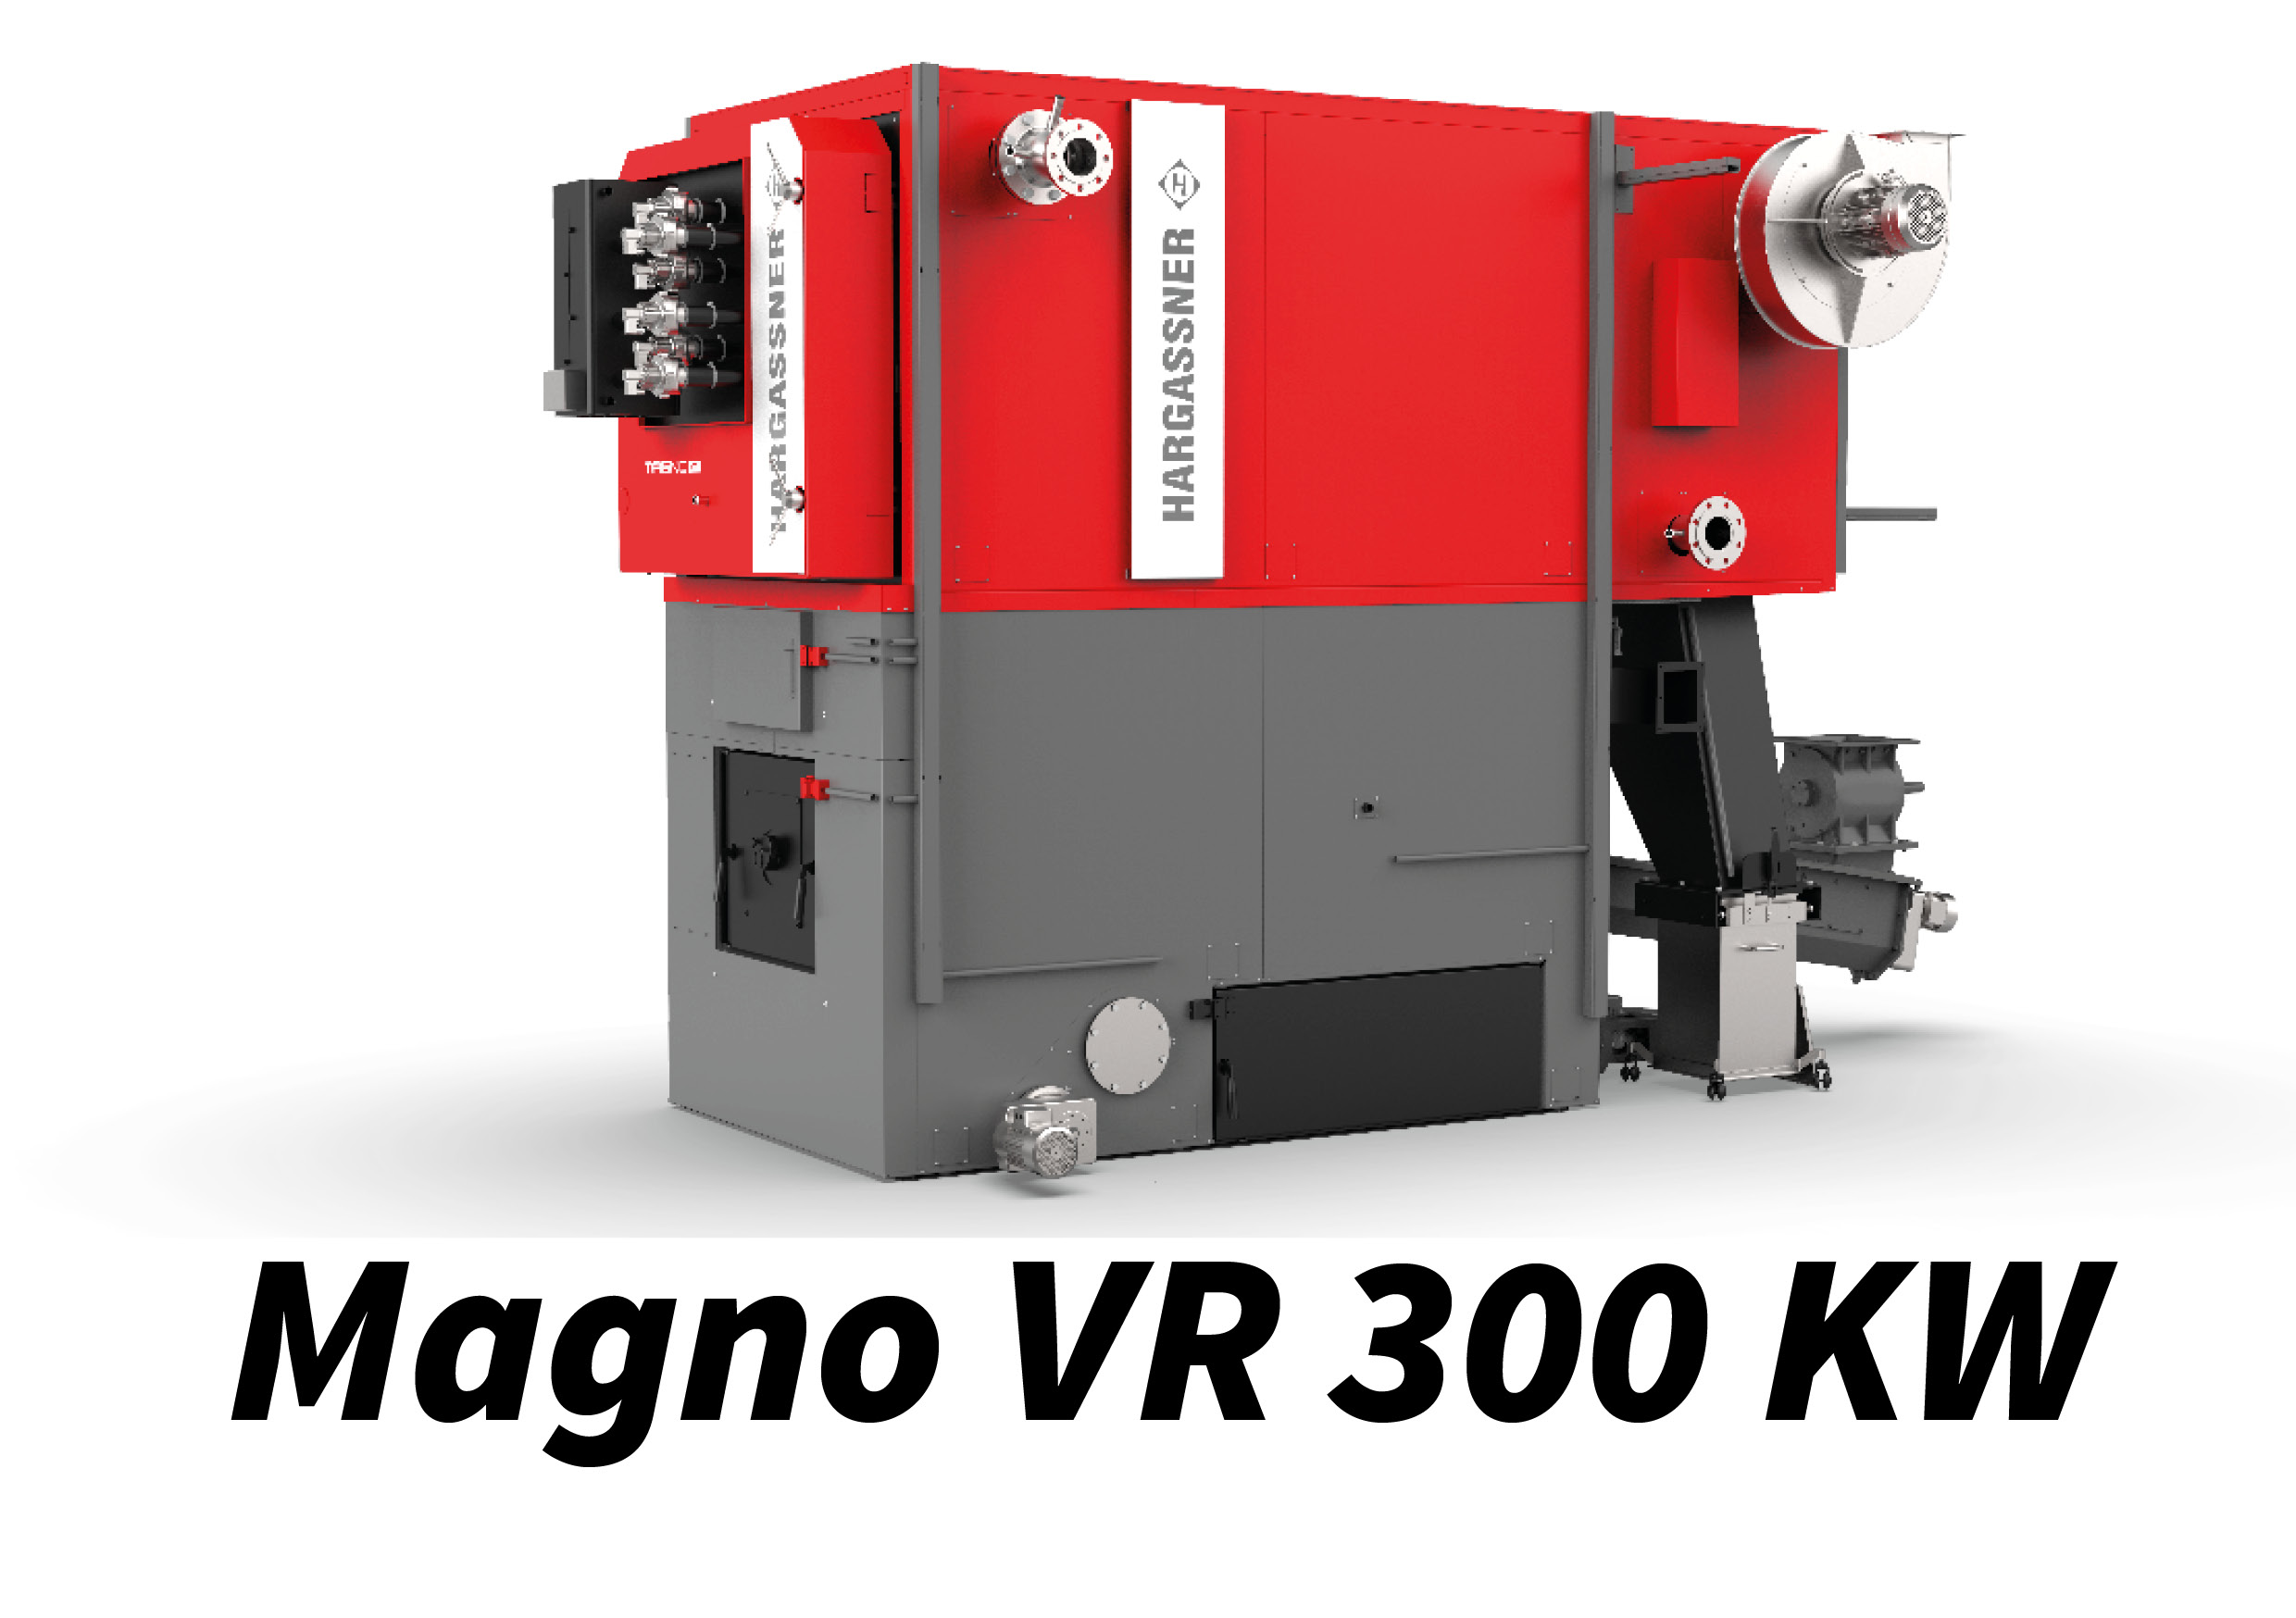 Magno VR 300 kW